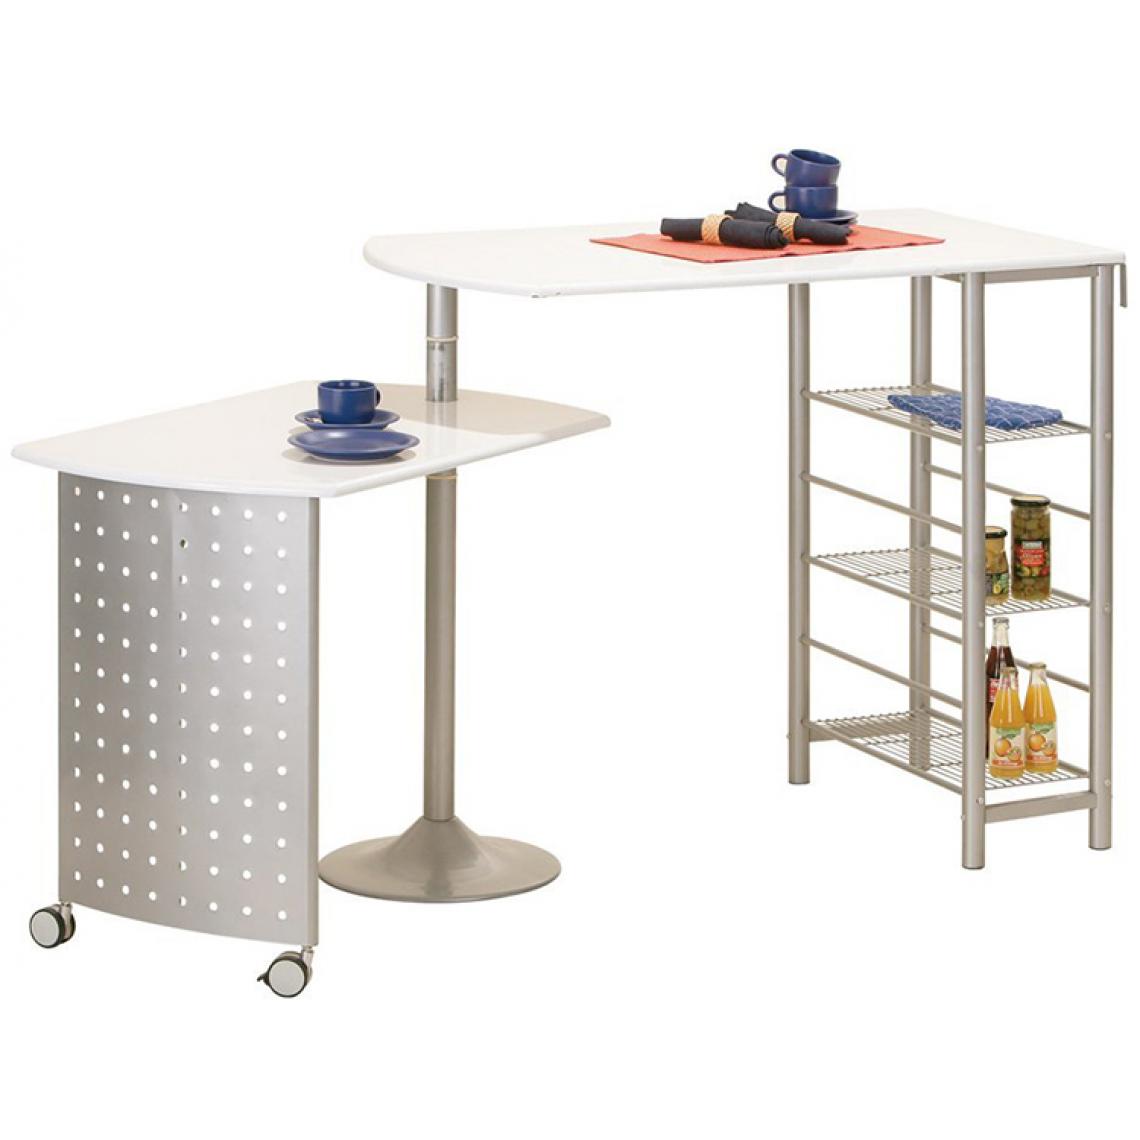 Pegane - Table-Bar en métal Blanc, Dim : 70 x 183 x 100 cm - Tables à manger